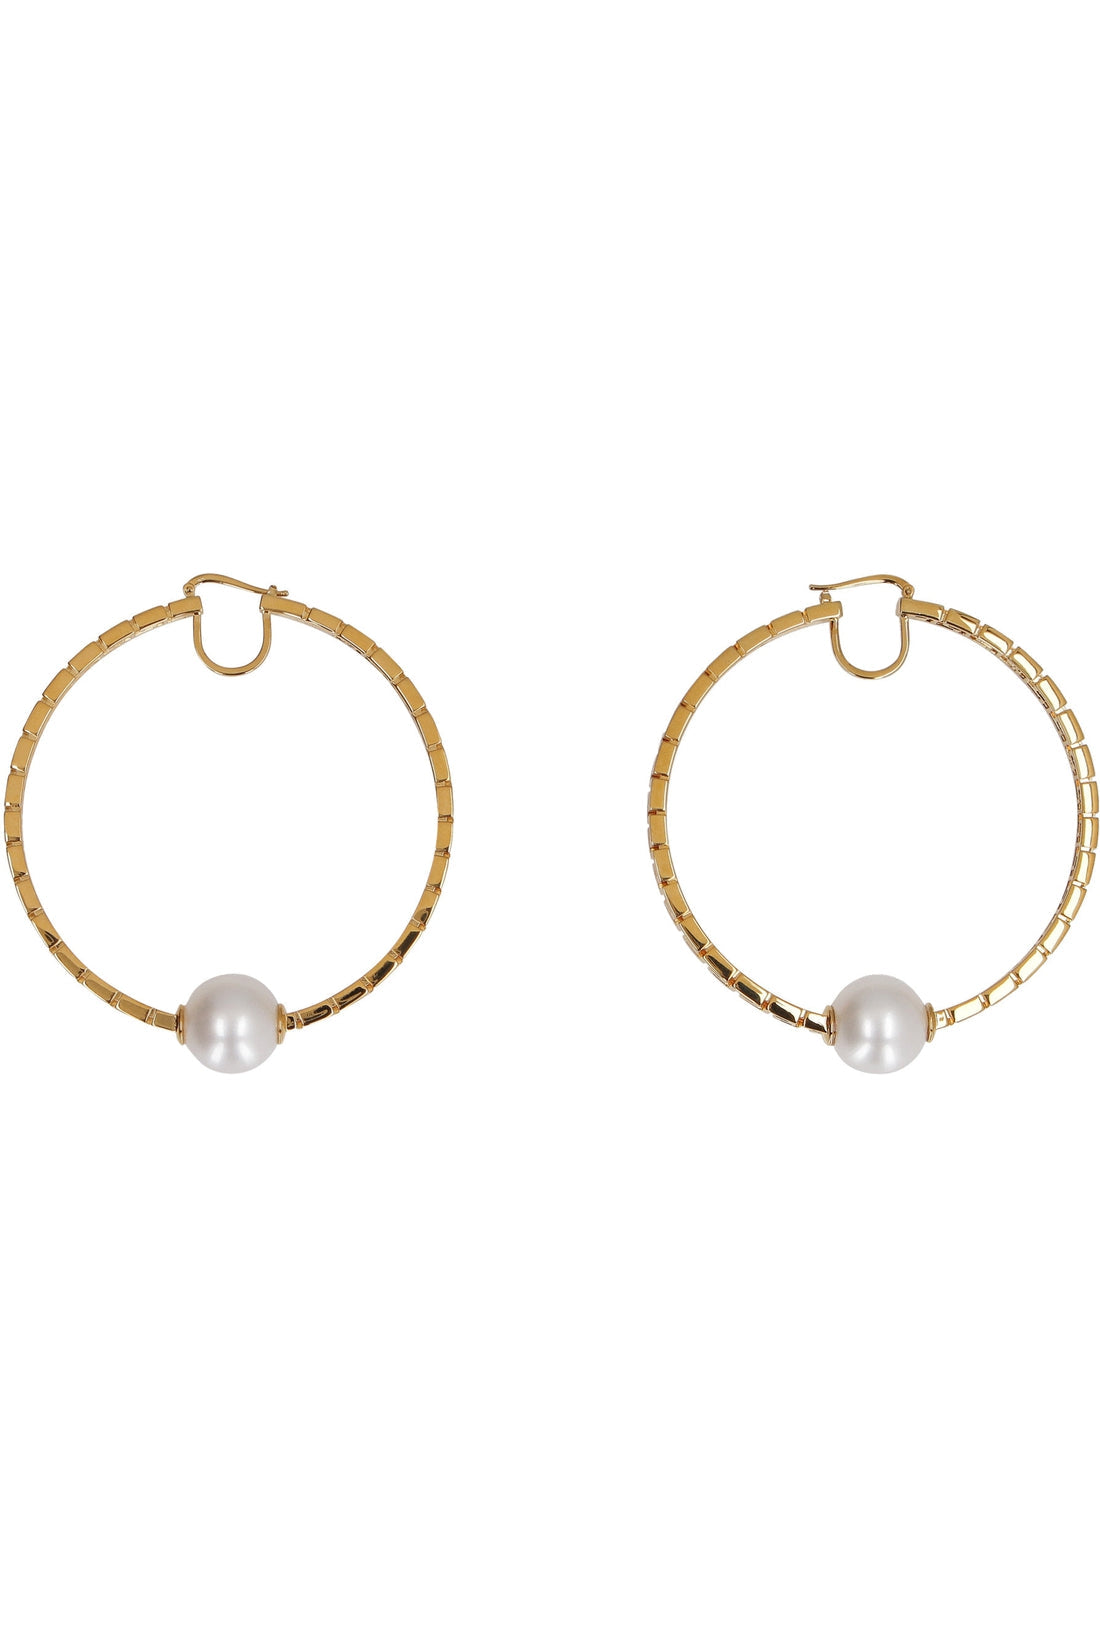 Versace-OUTLET-SALE-Greca hoop earrings with pearls-ARCHIVIST